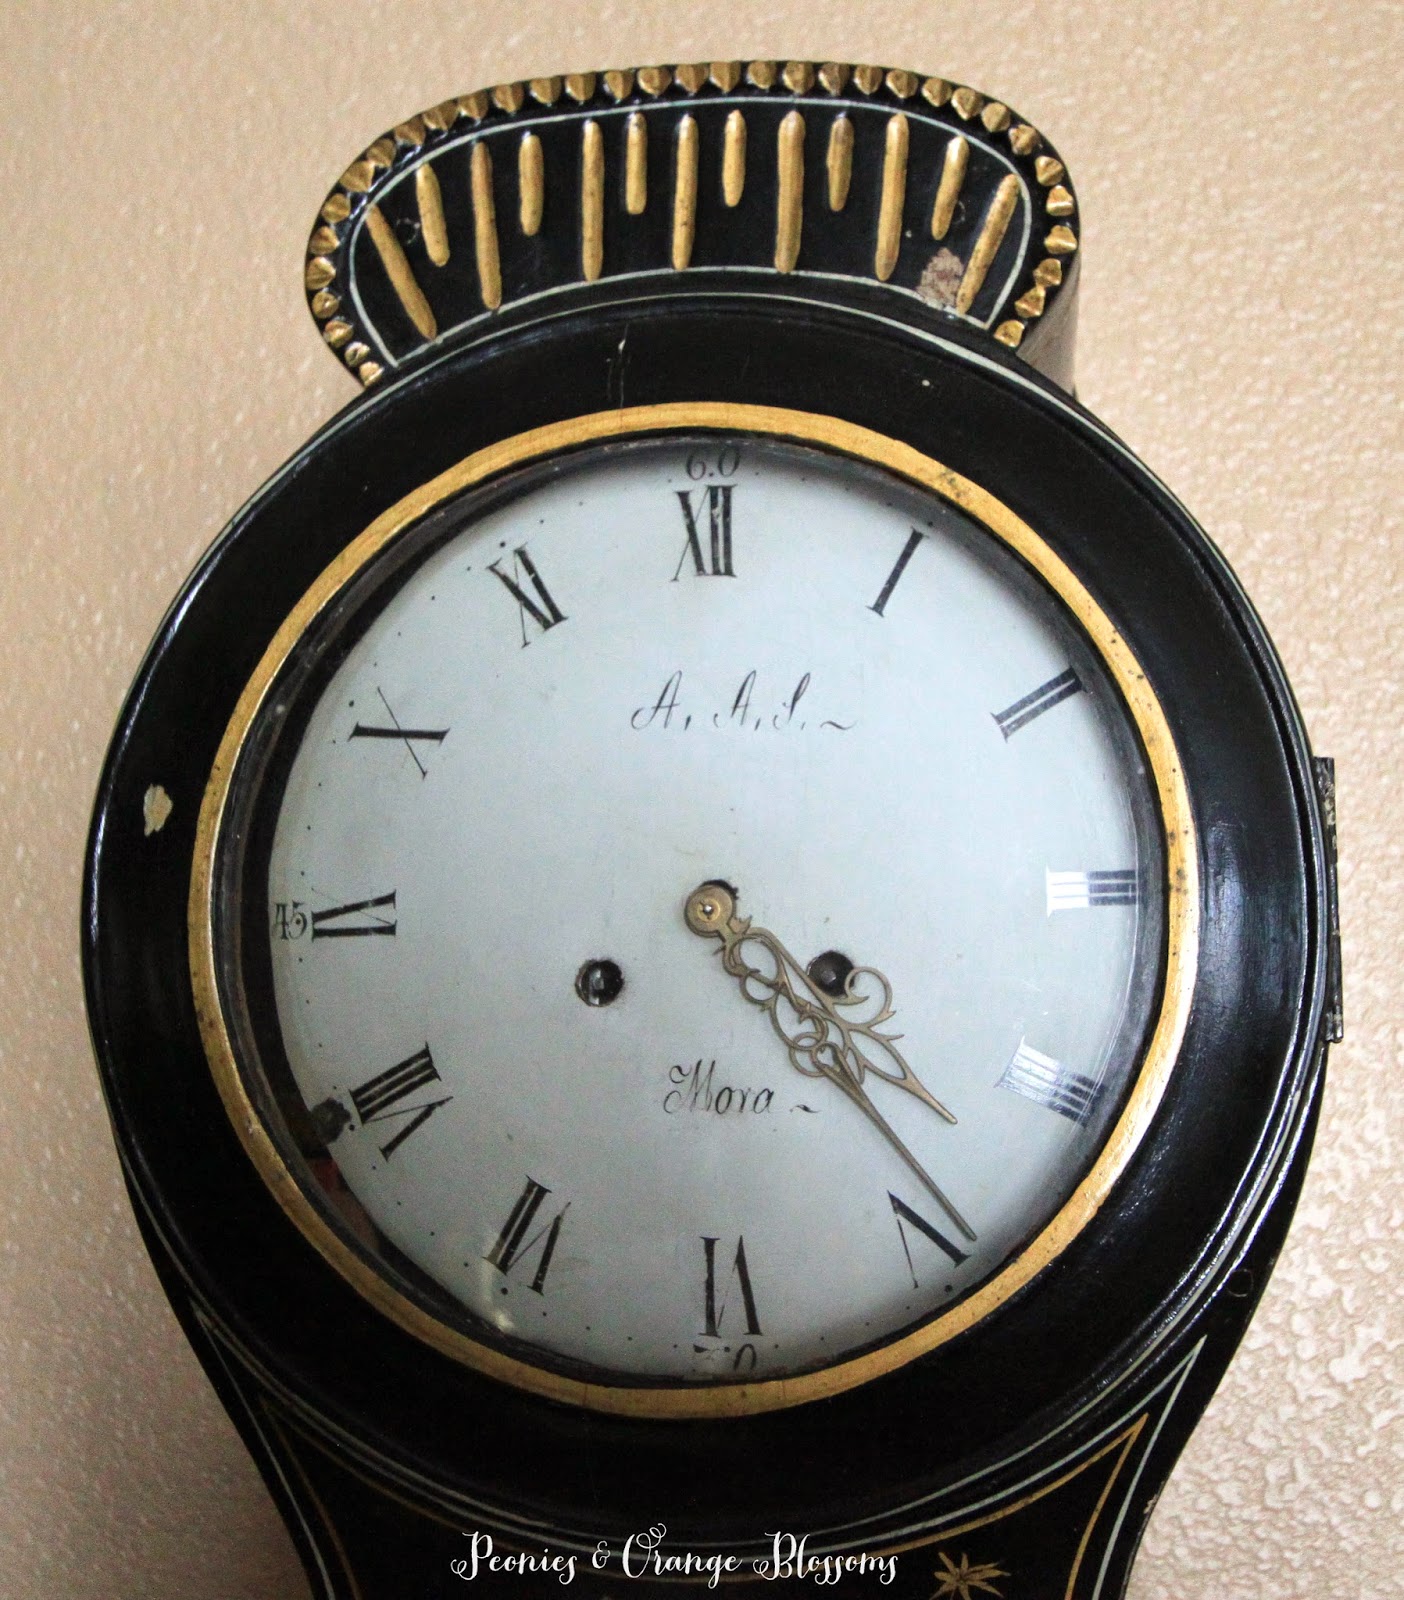 Chinoiserie Black Antique Mora Clock at Peonies & Orange Blossoms